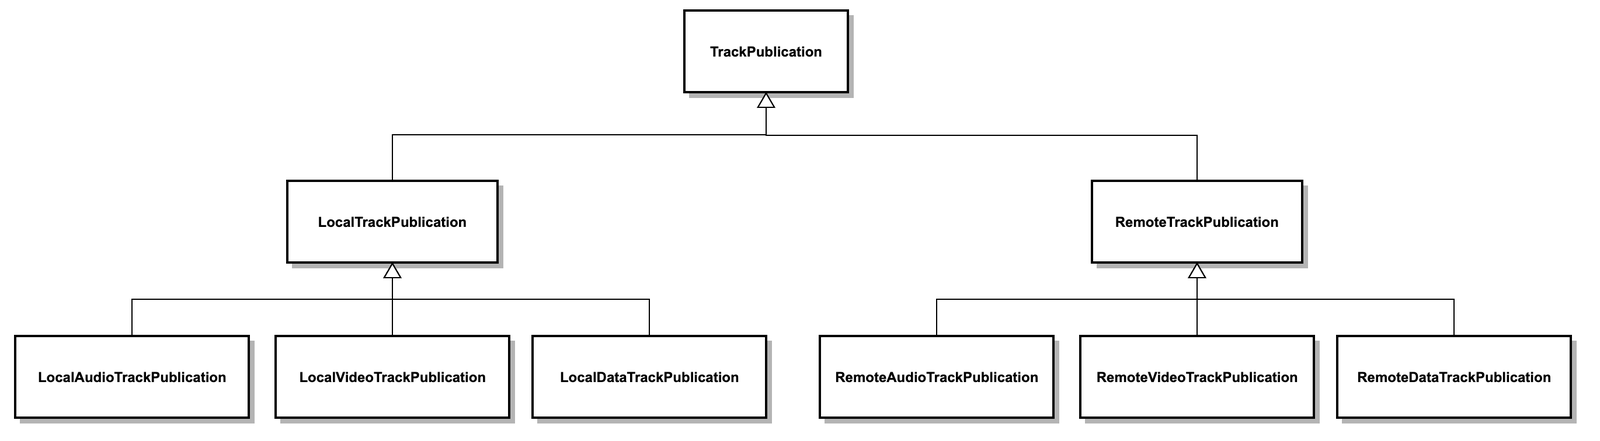 Programmable Video SDK TrackPublication Types.